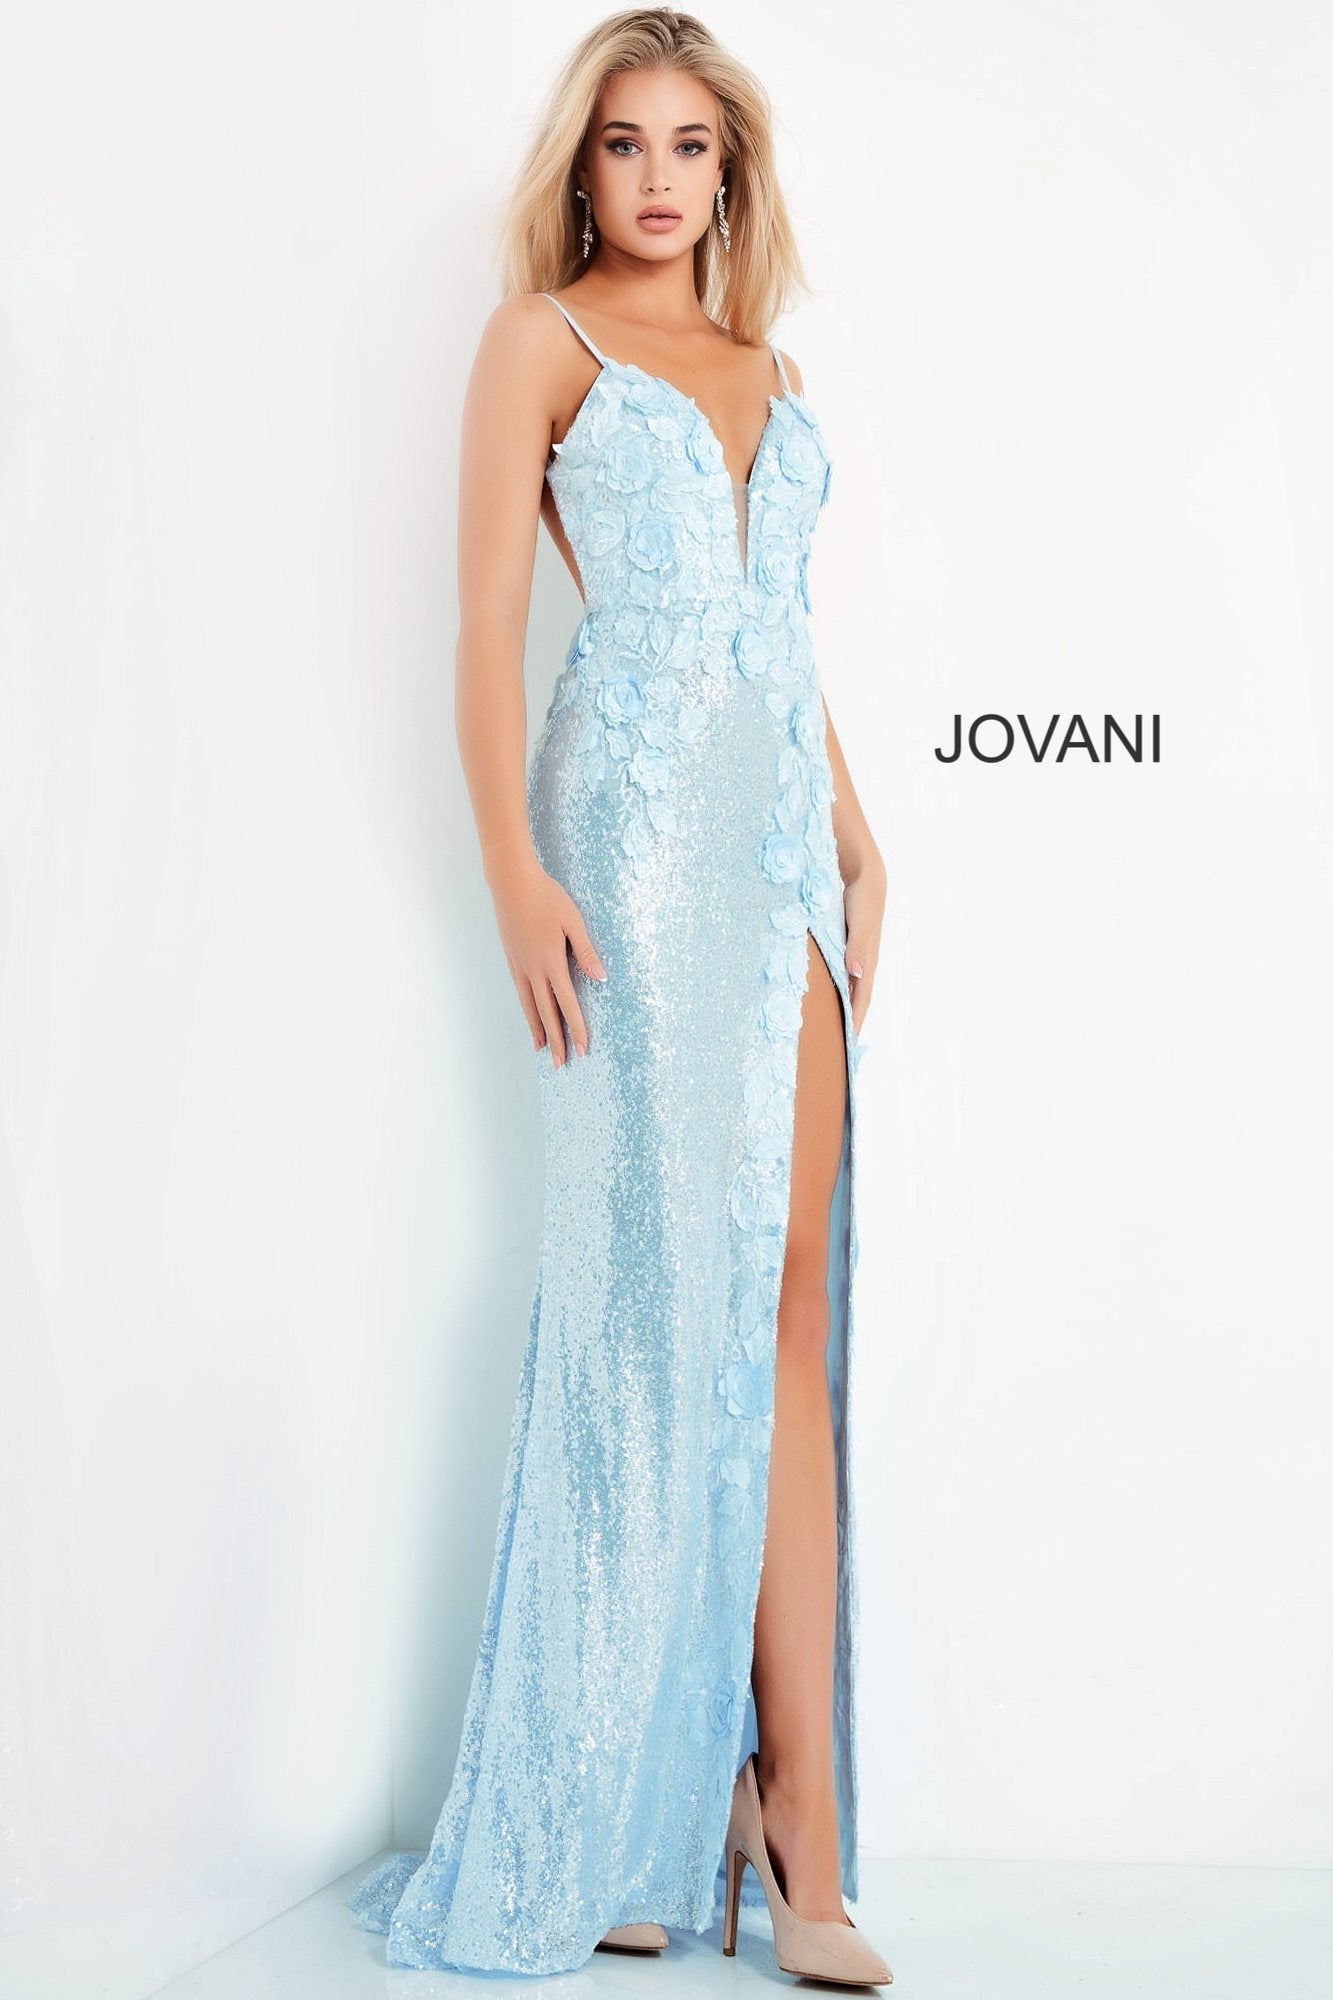 Jovani 1012 light blue